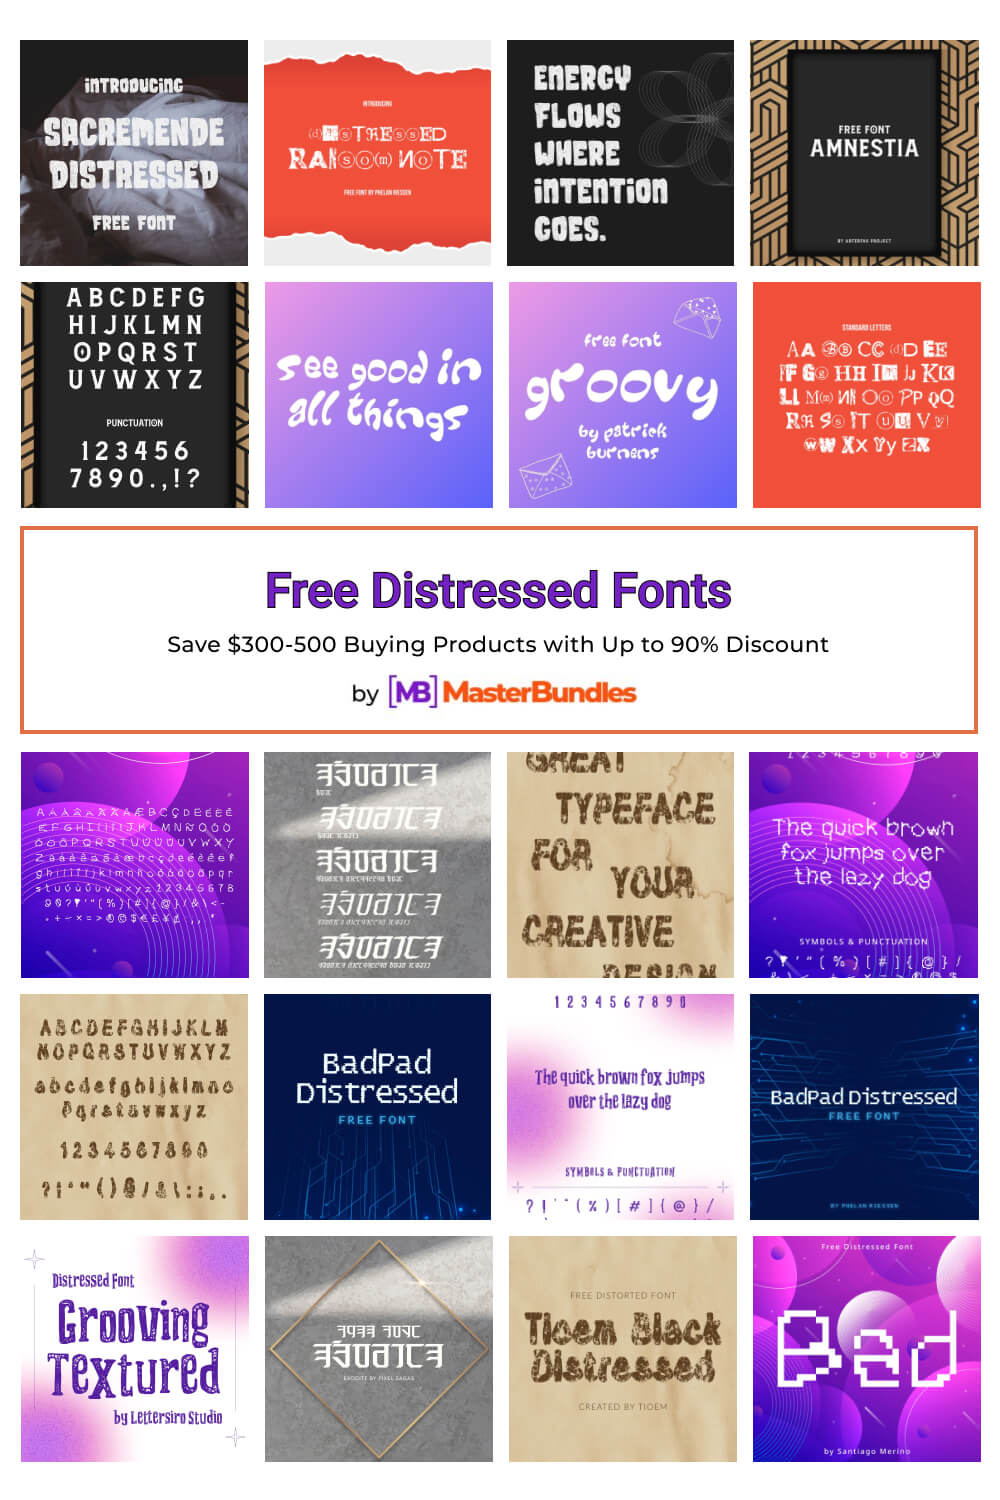 free distressed fonts pinterest image.